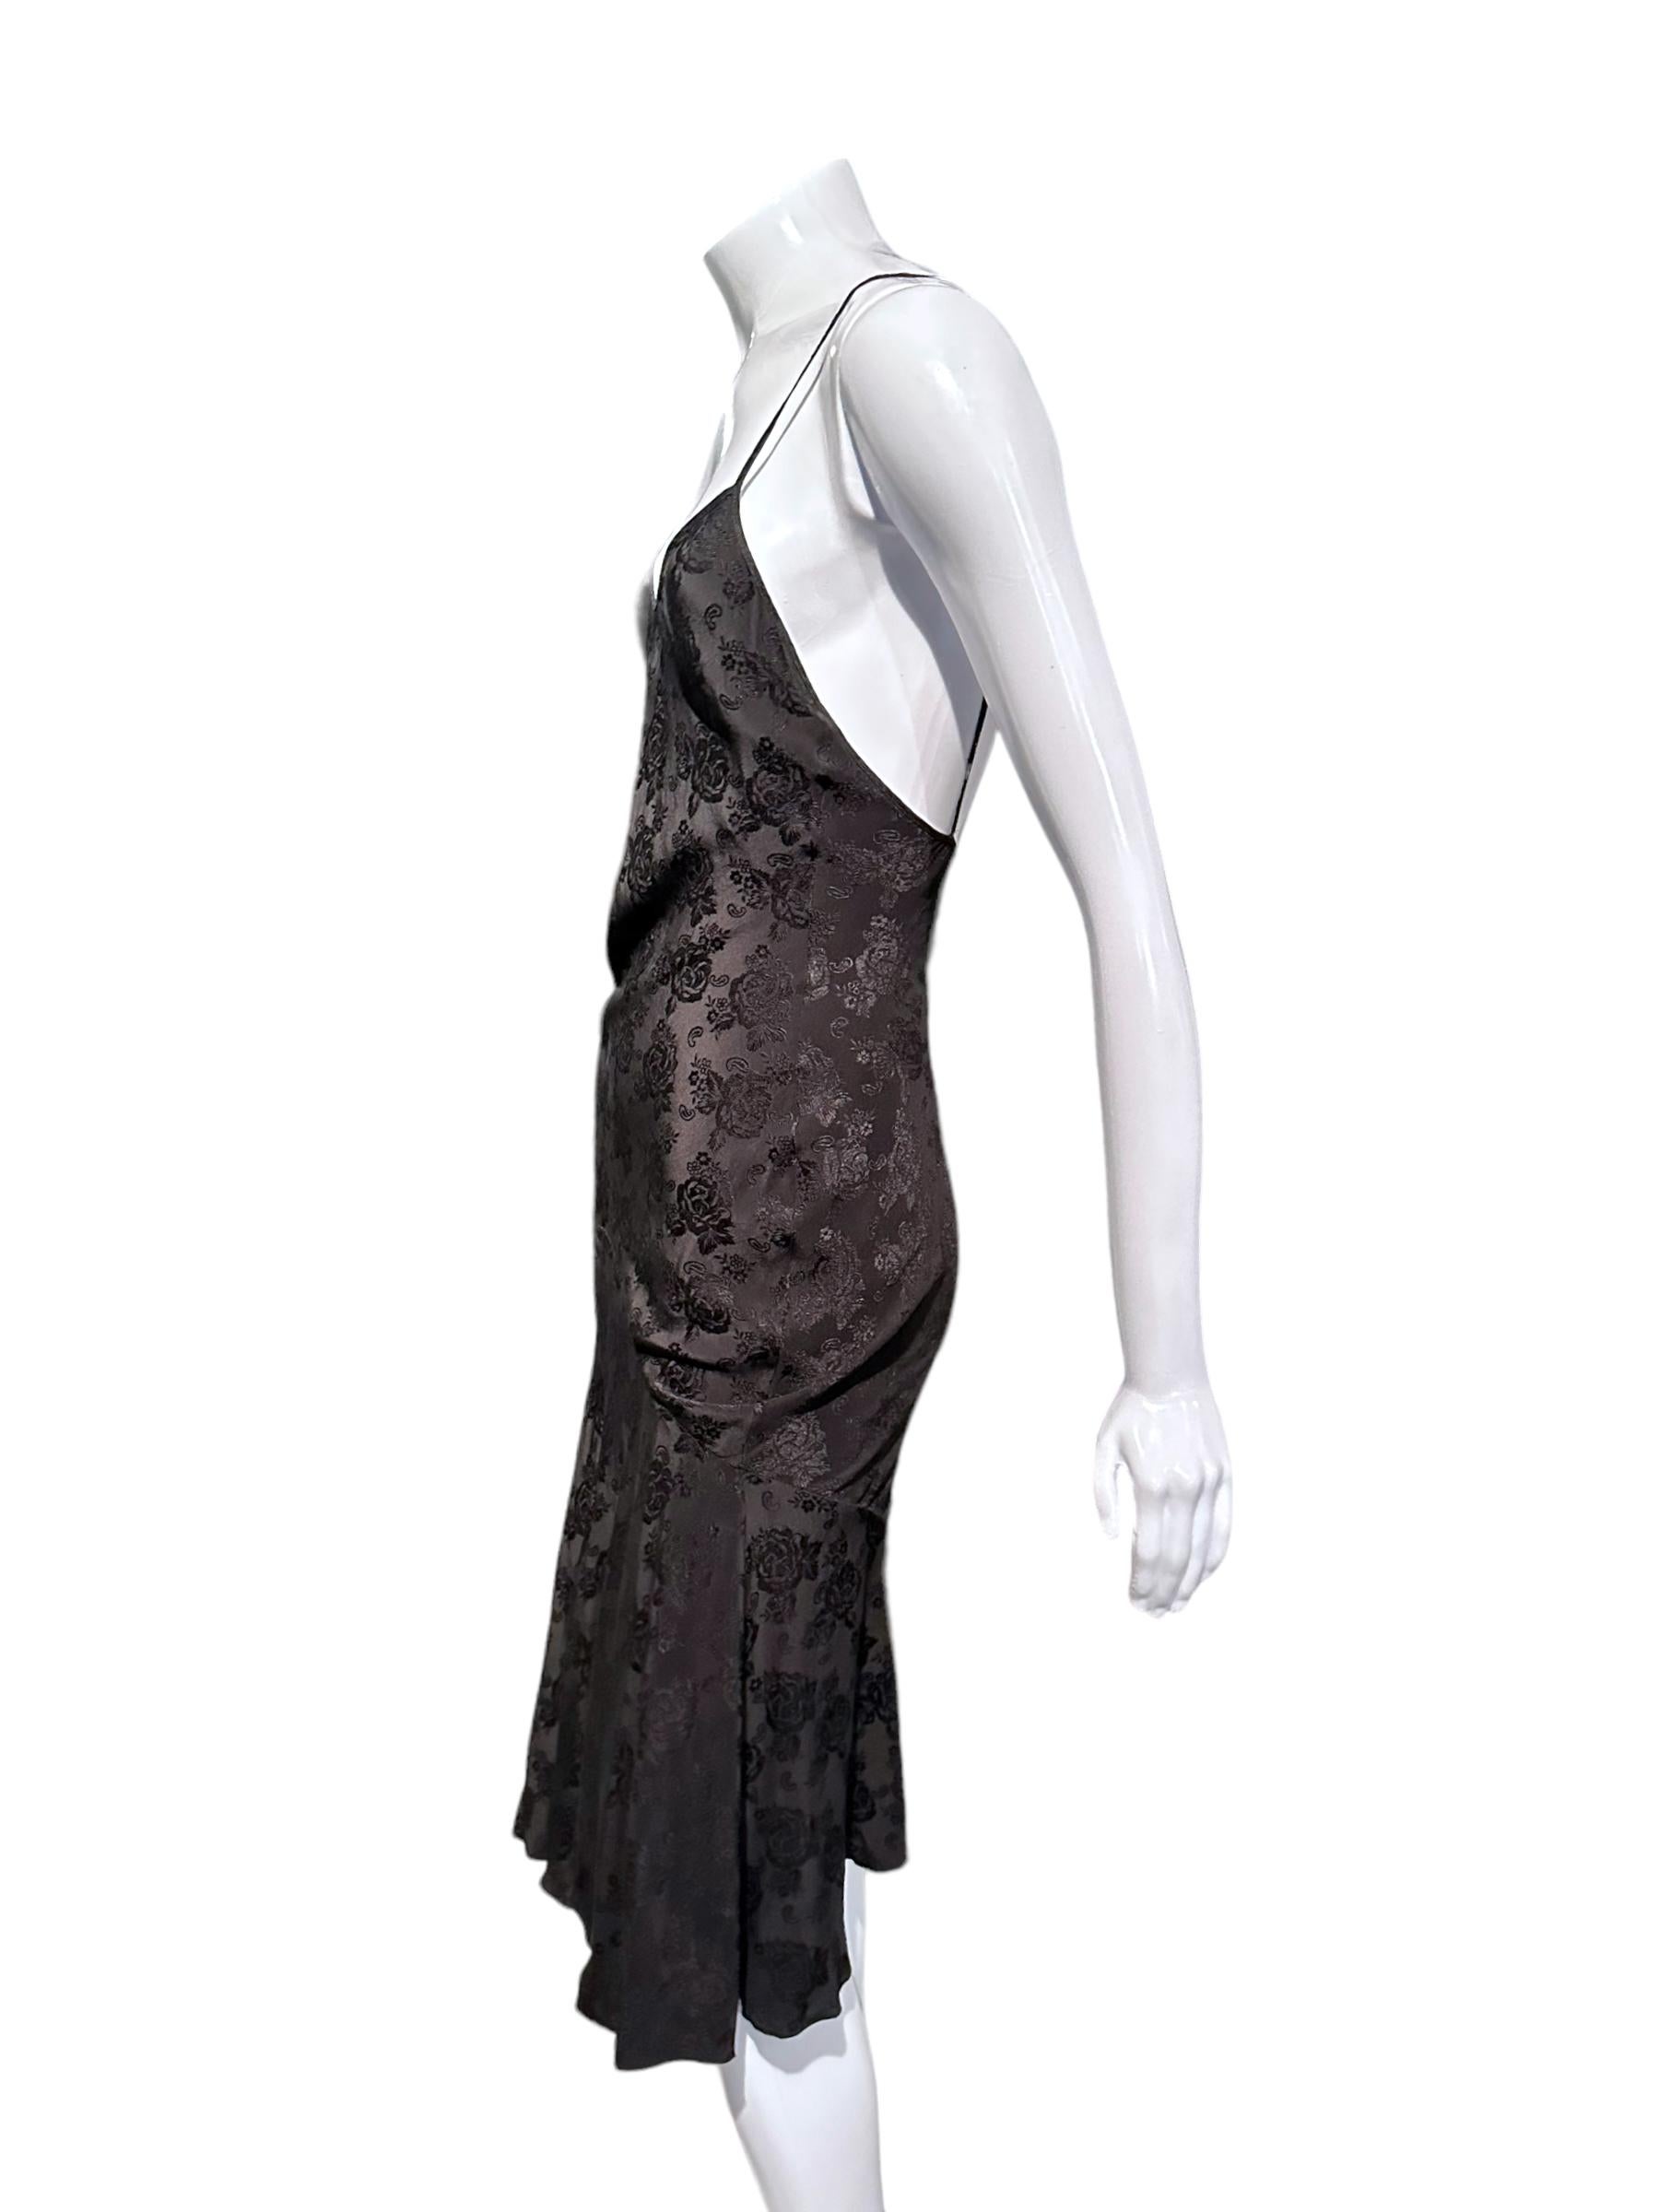 Christian Dior By John Galliano Ss 1998 Beaded Tulle Overlay Slip Dress For Sale 4